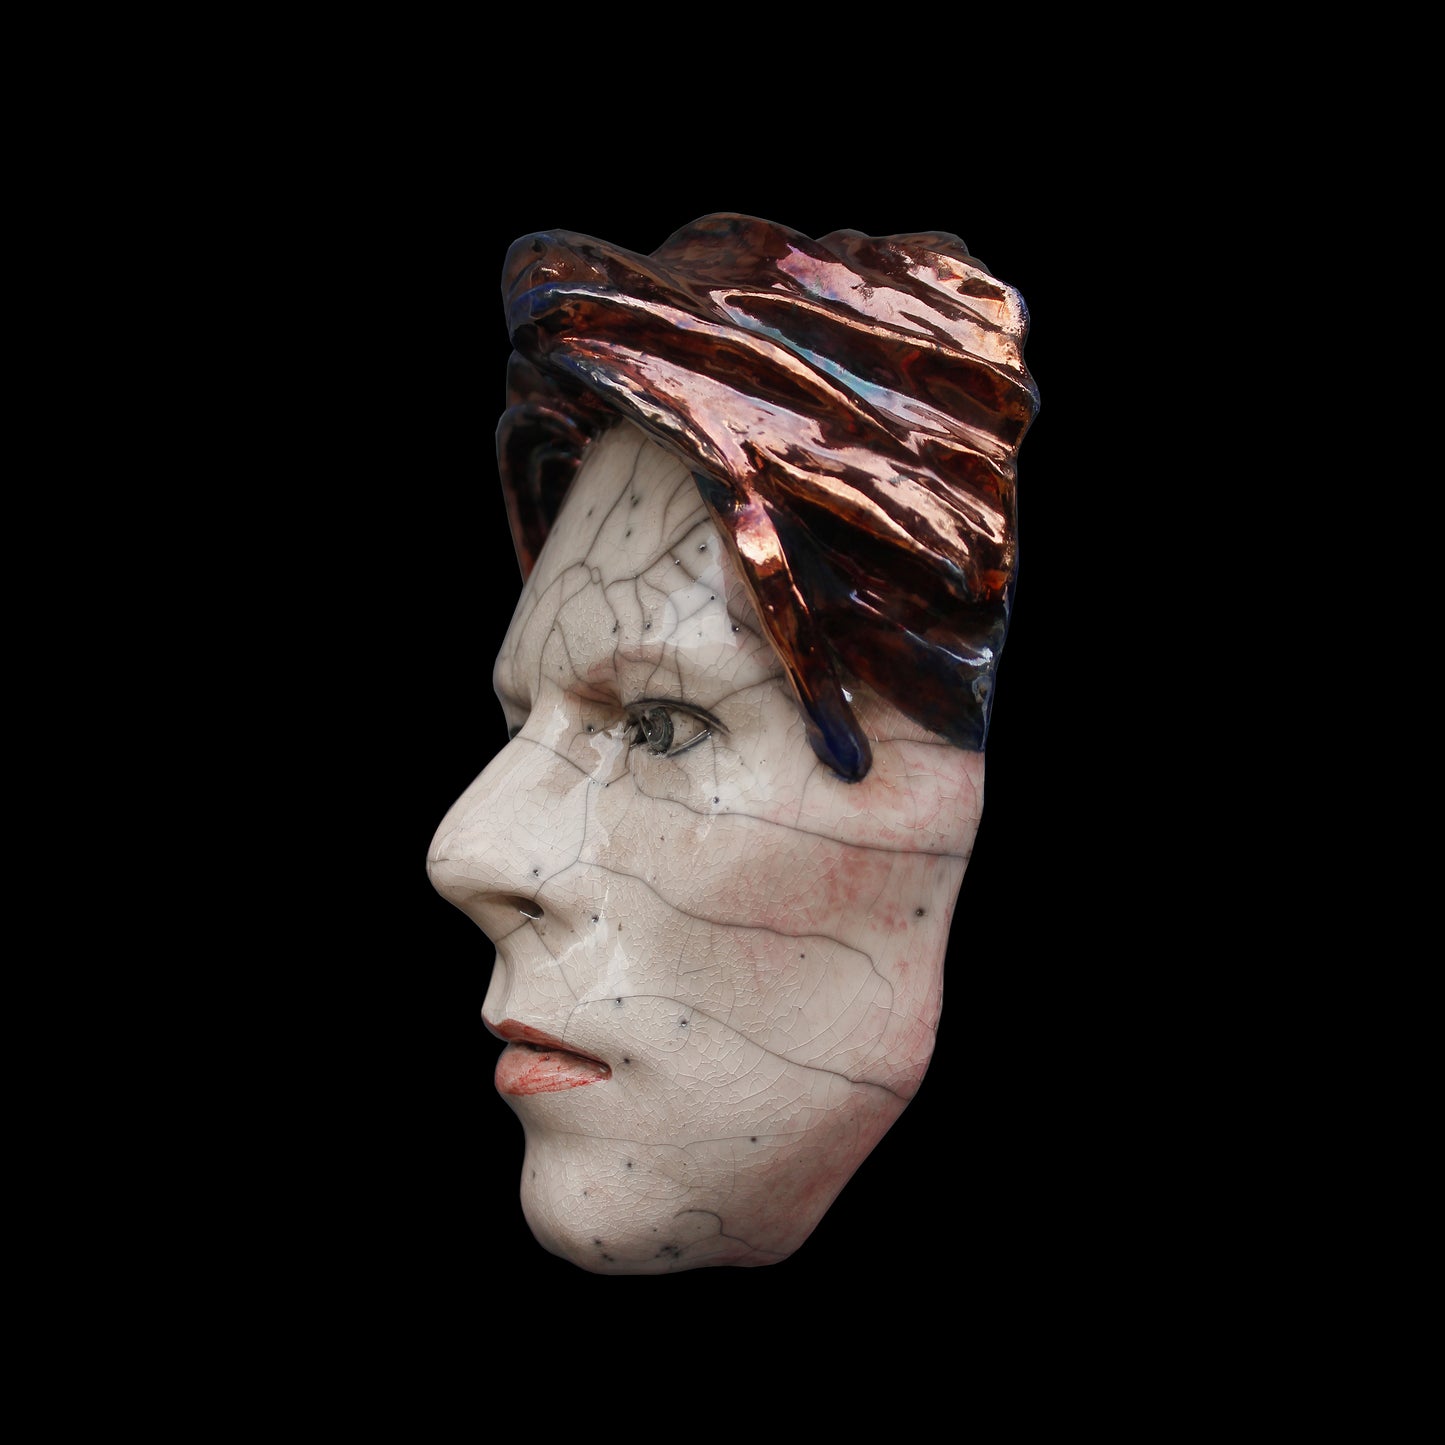 David Bowie - The Man Who Fell To Earth Raku Ceramic Mask Sculpture